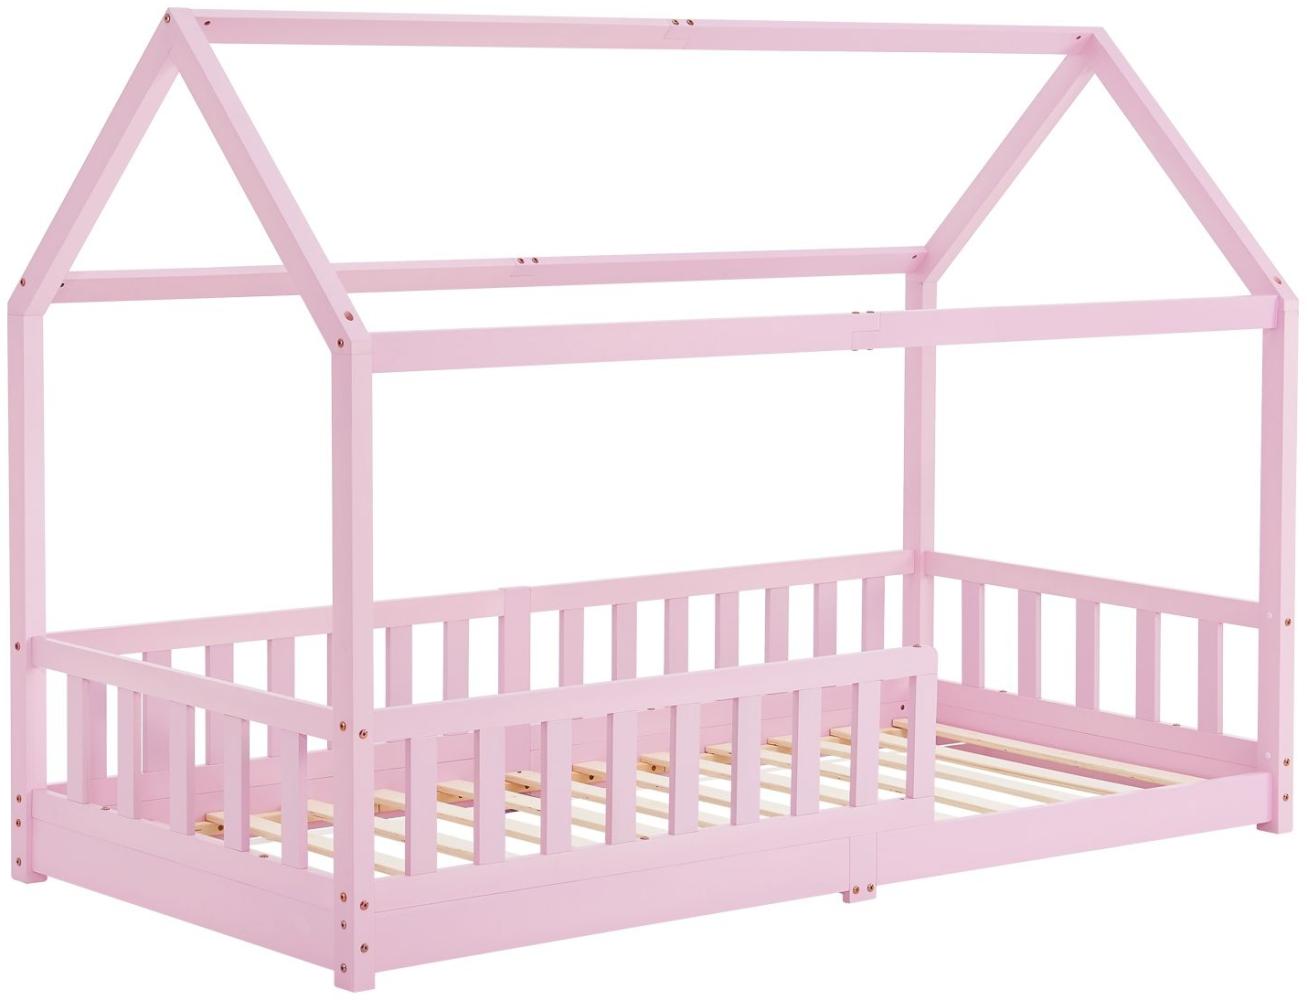 Juskys Kinderbett Marli 90 x 200 cm mit Rausfallschutz, Lattenrost und Dach - Massivholz Hausbett für Kinder - Bett in Rosa Bild 1